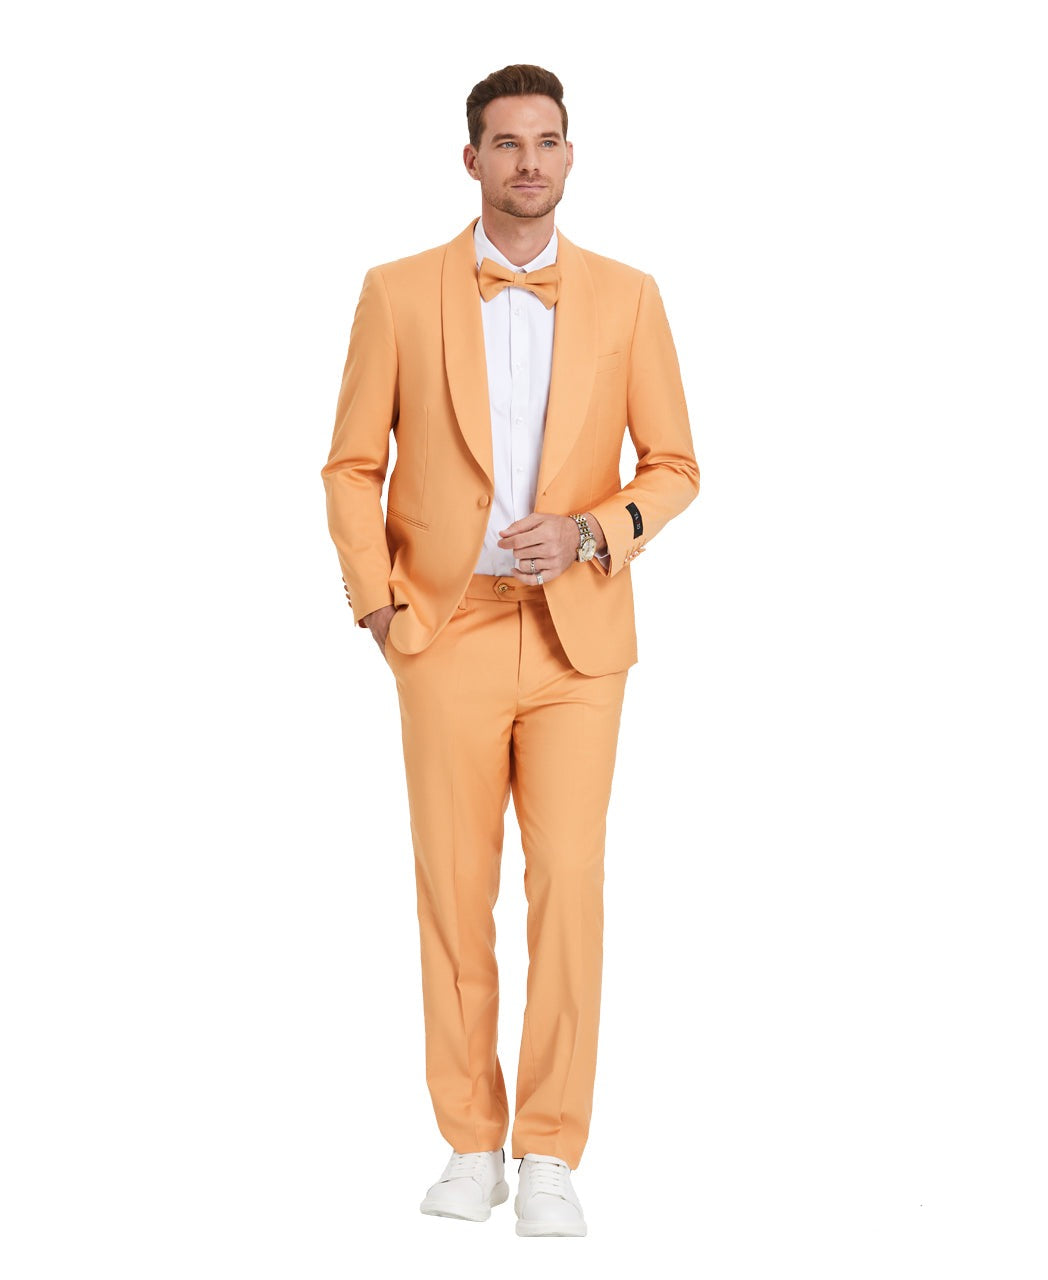 Boutique Collection Churidar Suit in Light Orange Fabric LSTV113445